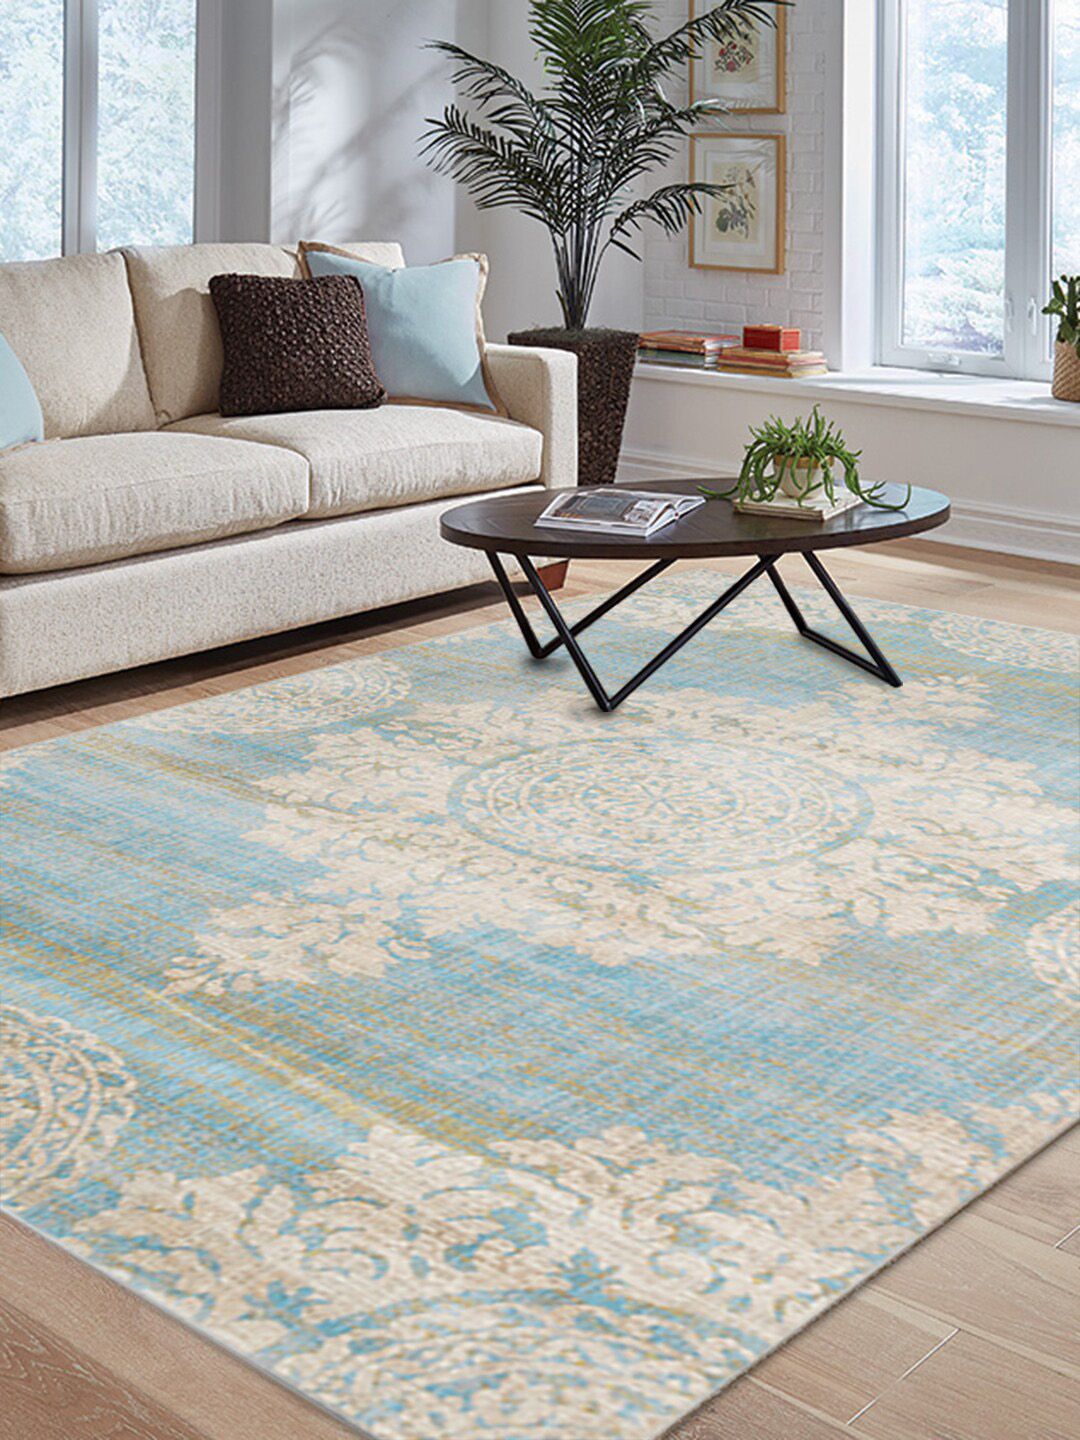 DDecor Blue & Cream Colored Ethnic Motifs Traditional Carpet Price in India